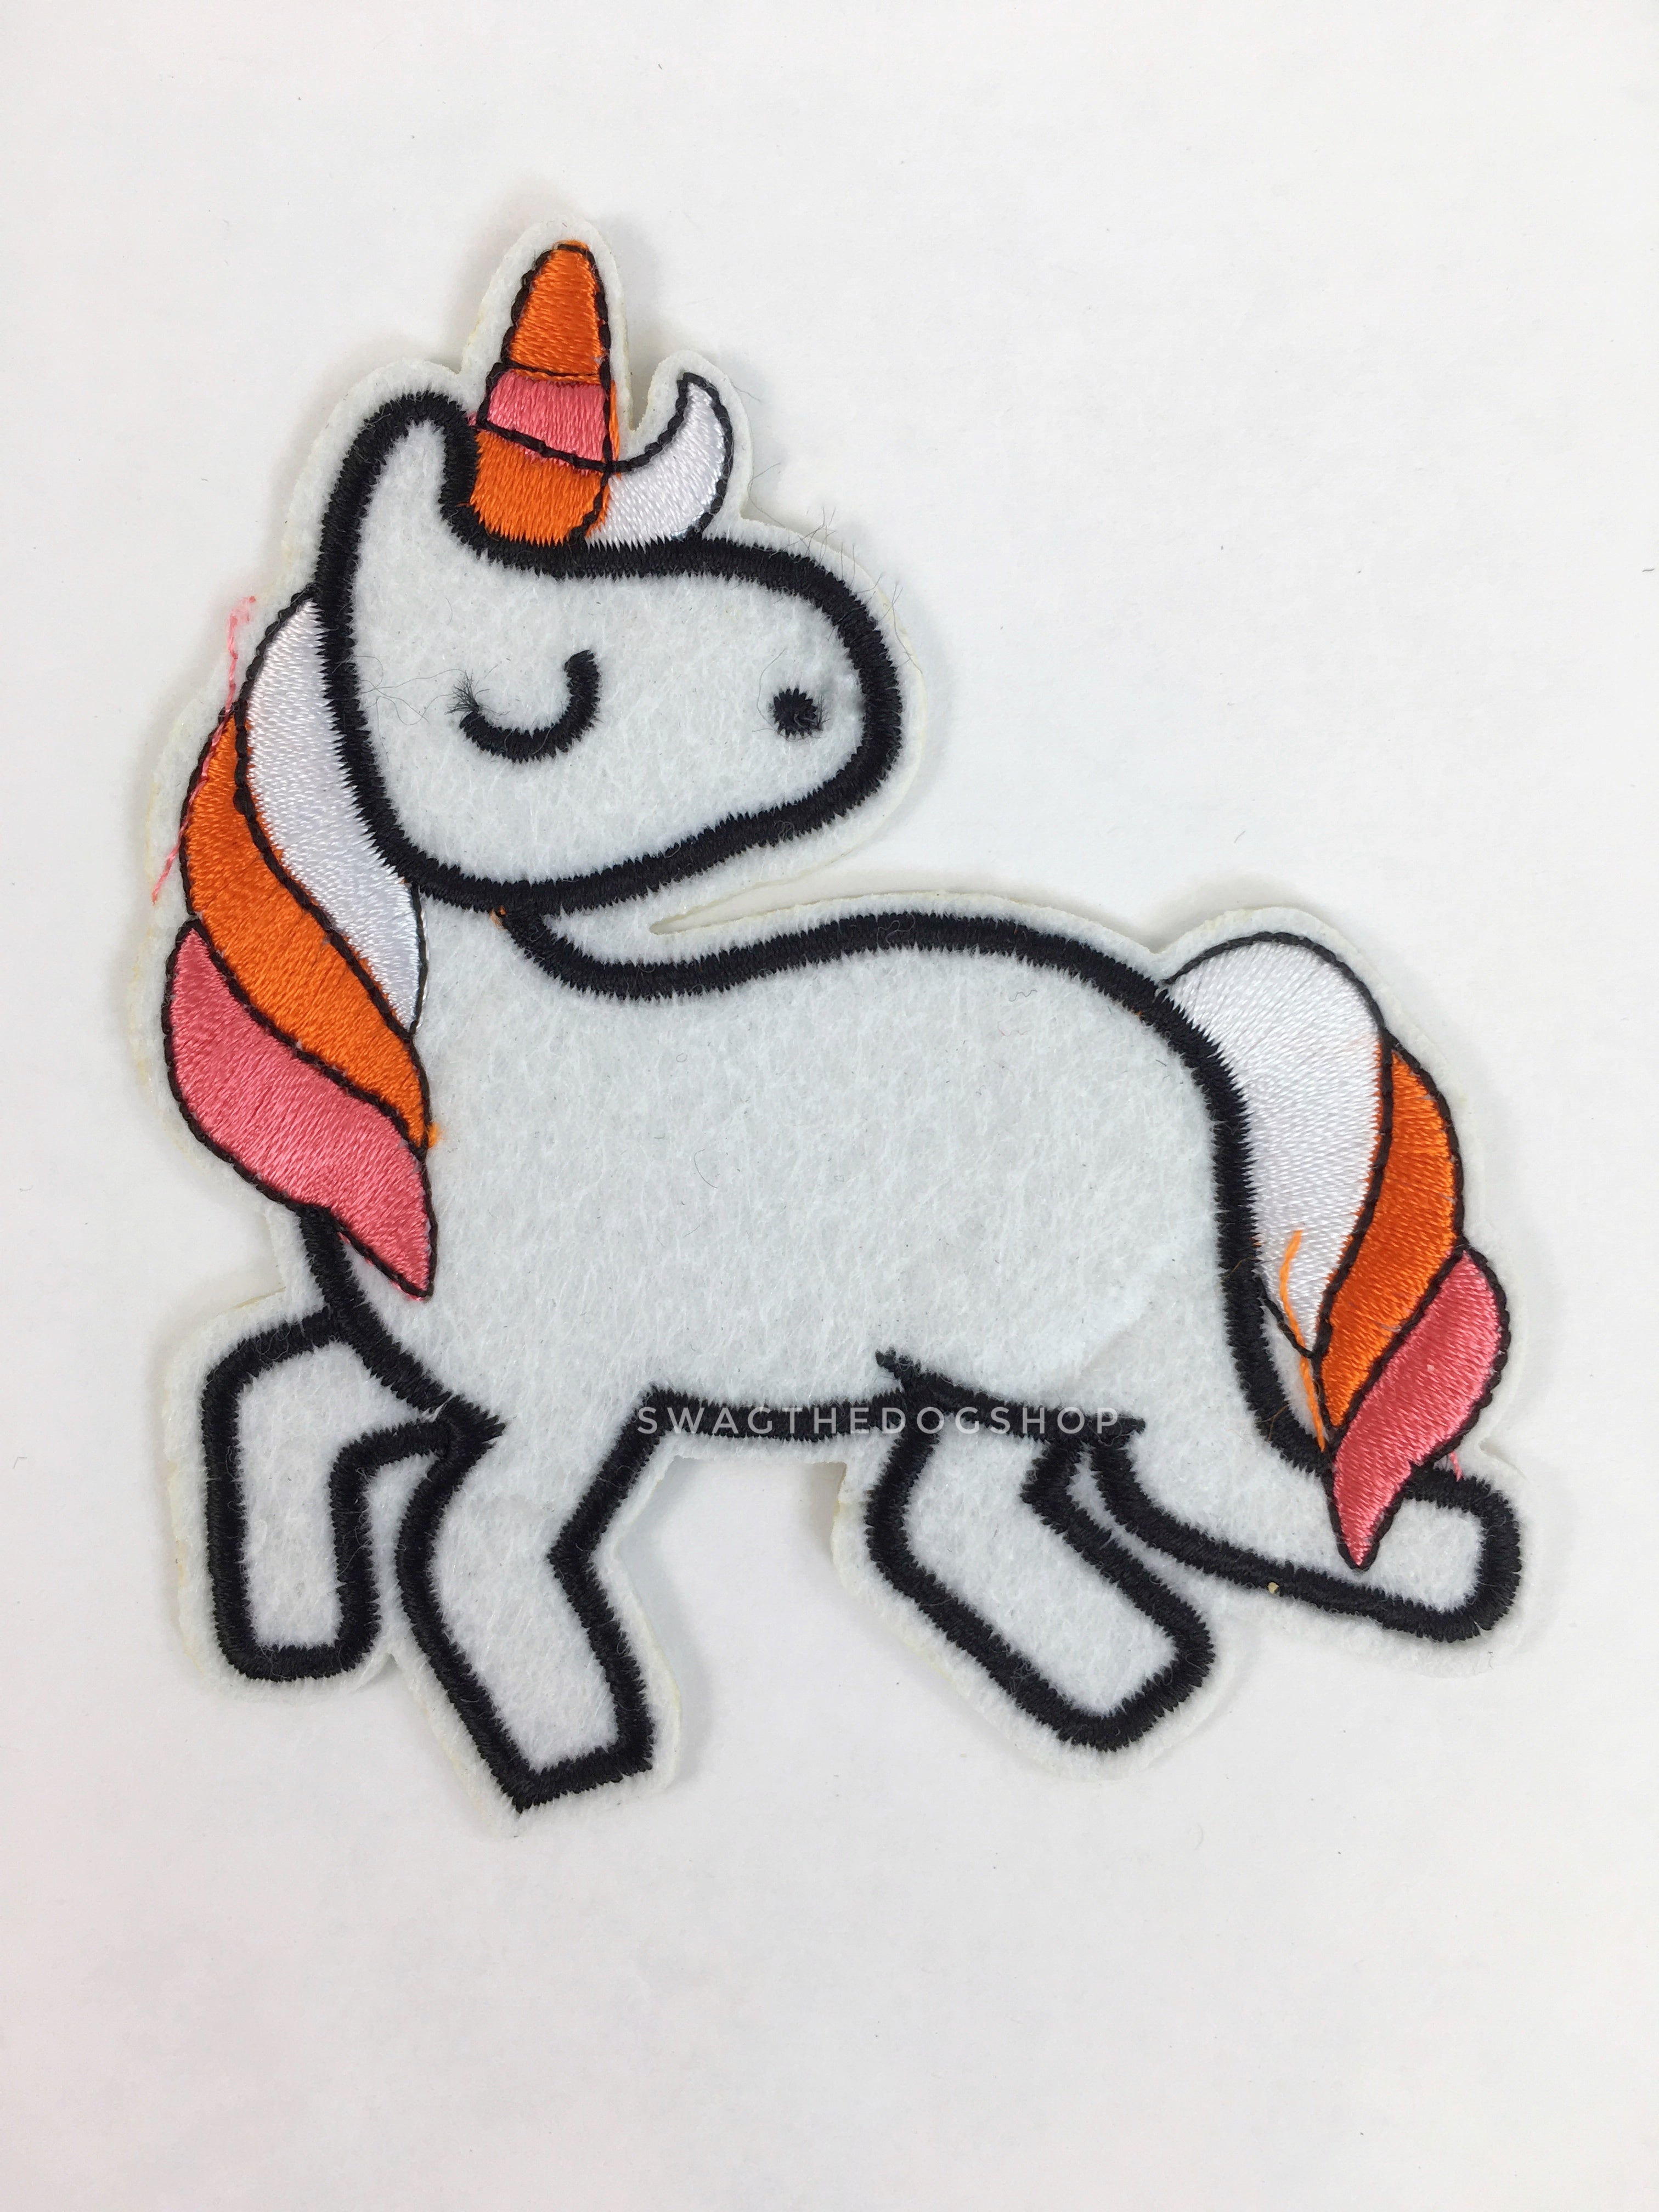 Patch Add-on - Unicorn